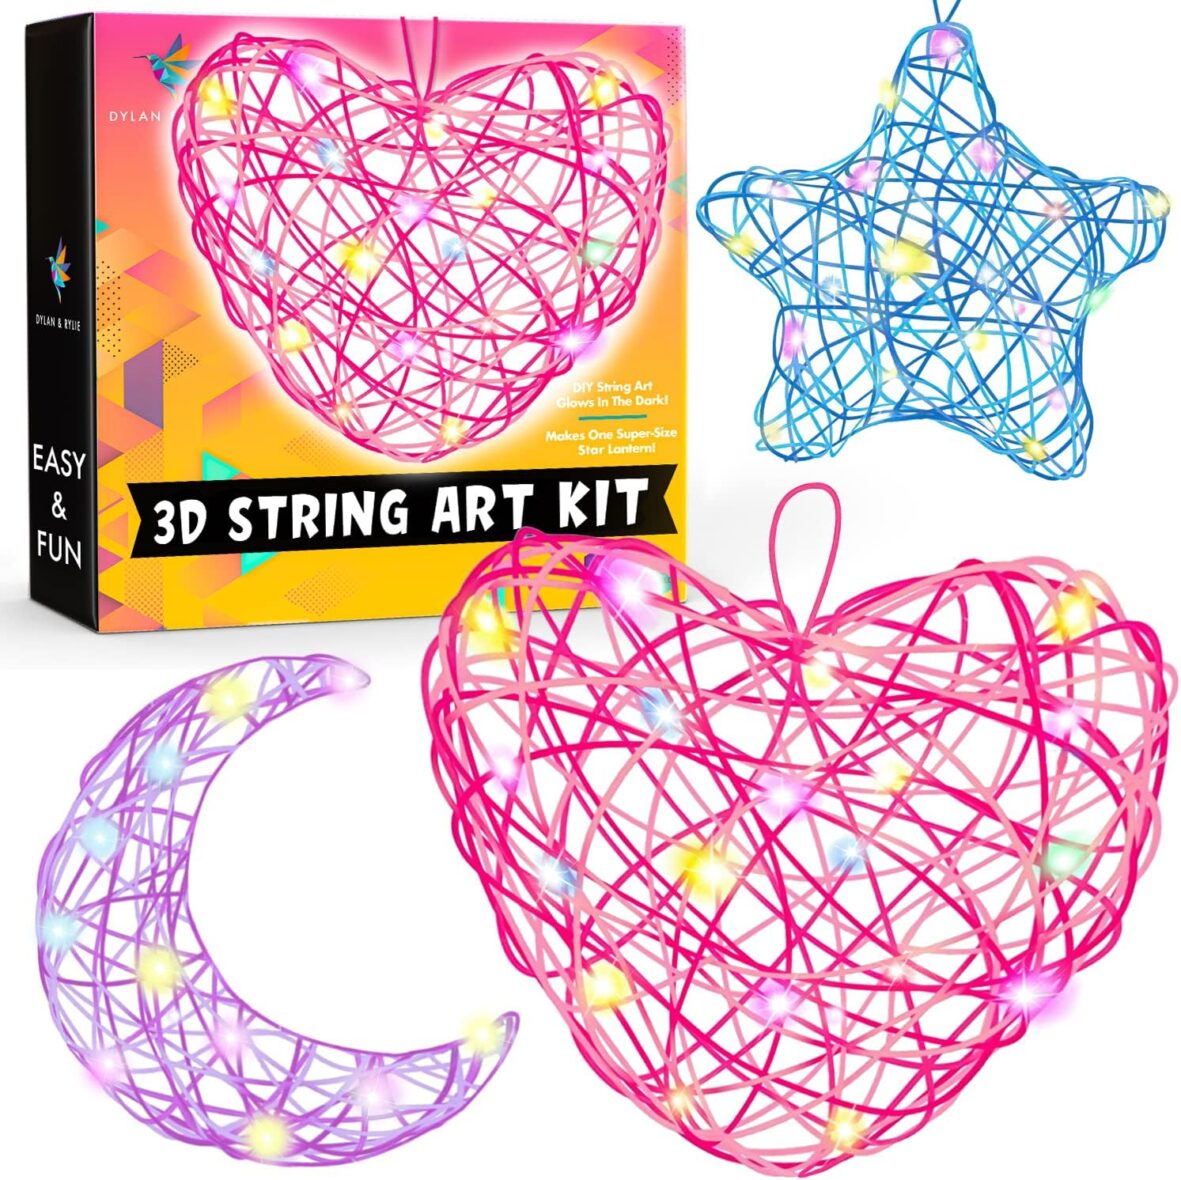 Dylan & Rylie DIY 3D Heart Lantern String Art Kit – Easy Craft for Kids 8+, Glowing Room Decor, Creative Gift for Children